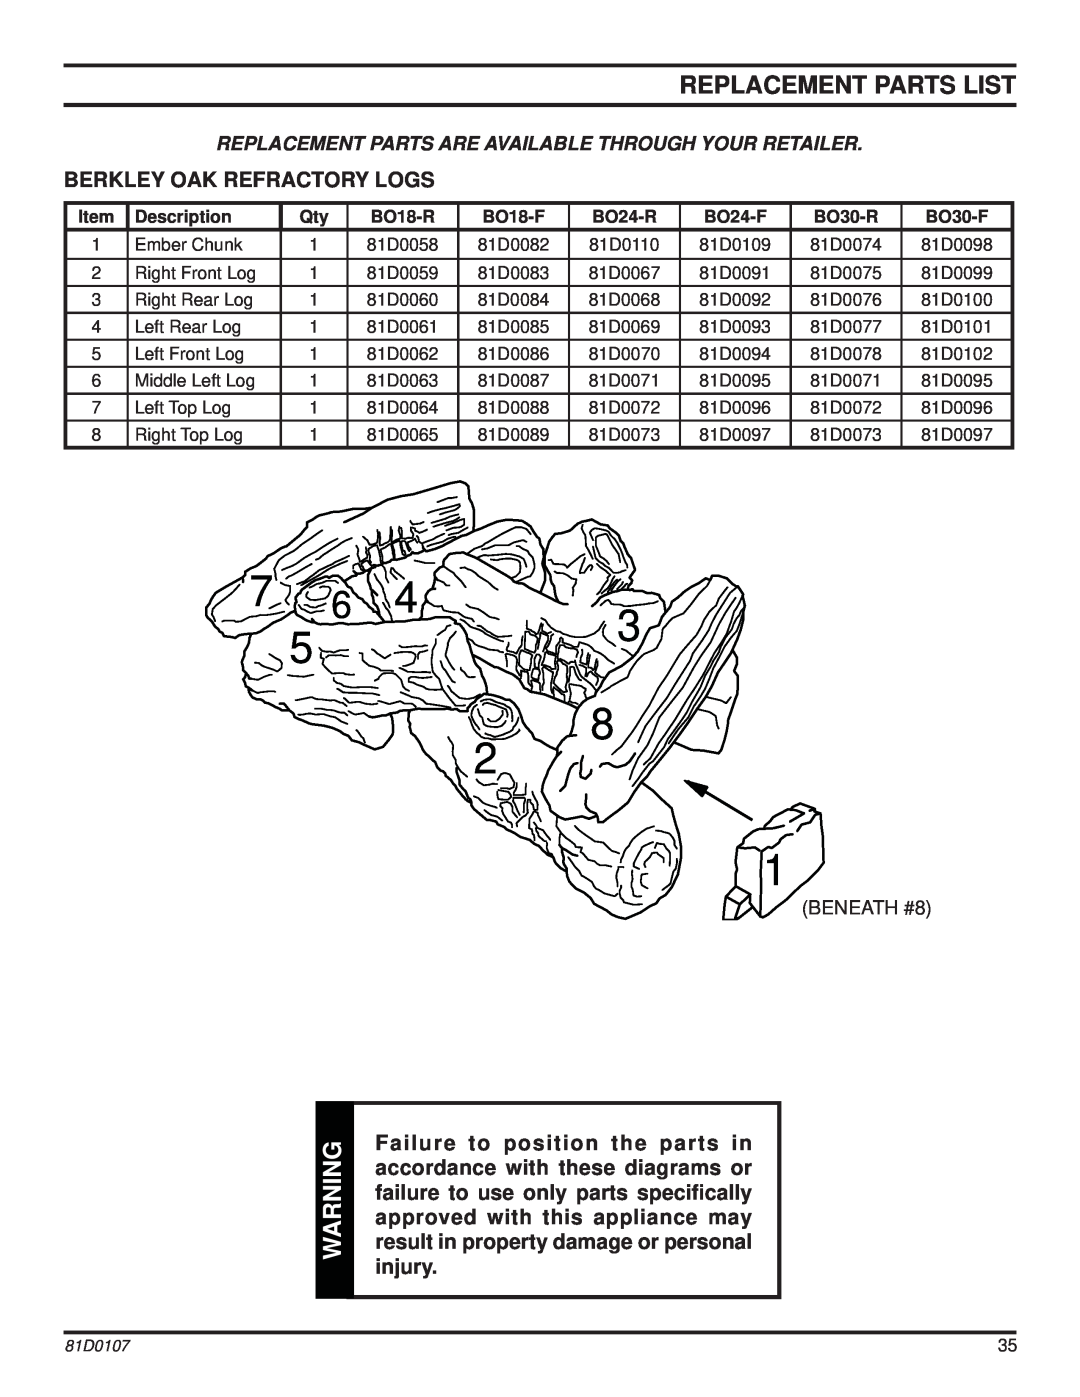 Monessen Hearth NB18, NB24 operating instructions 756, Replacement Parts List, Berkley Oak Refractory Logs, BENEATH #8 